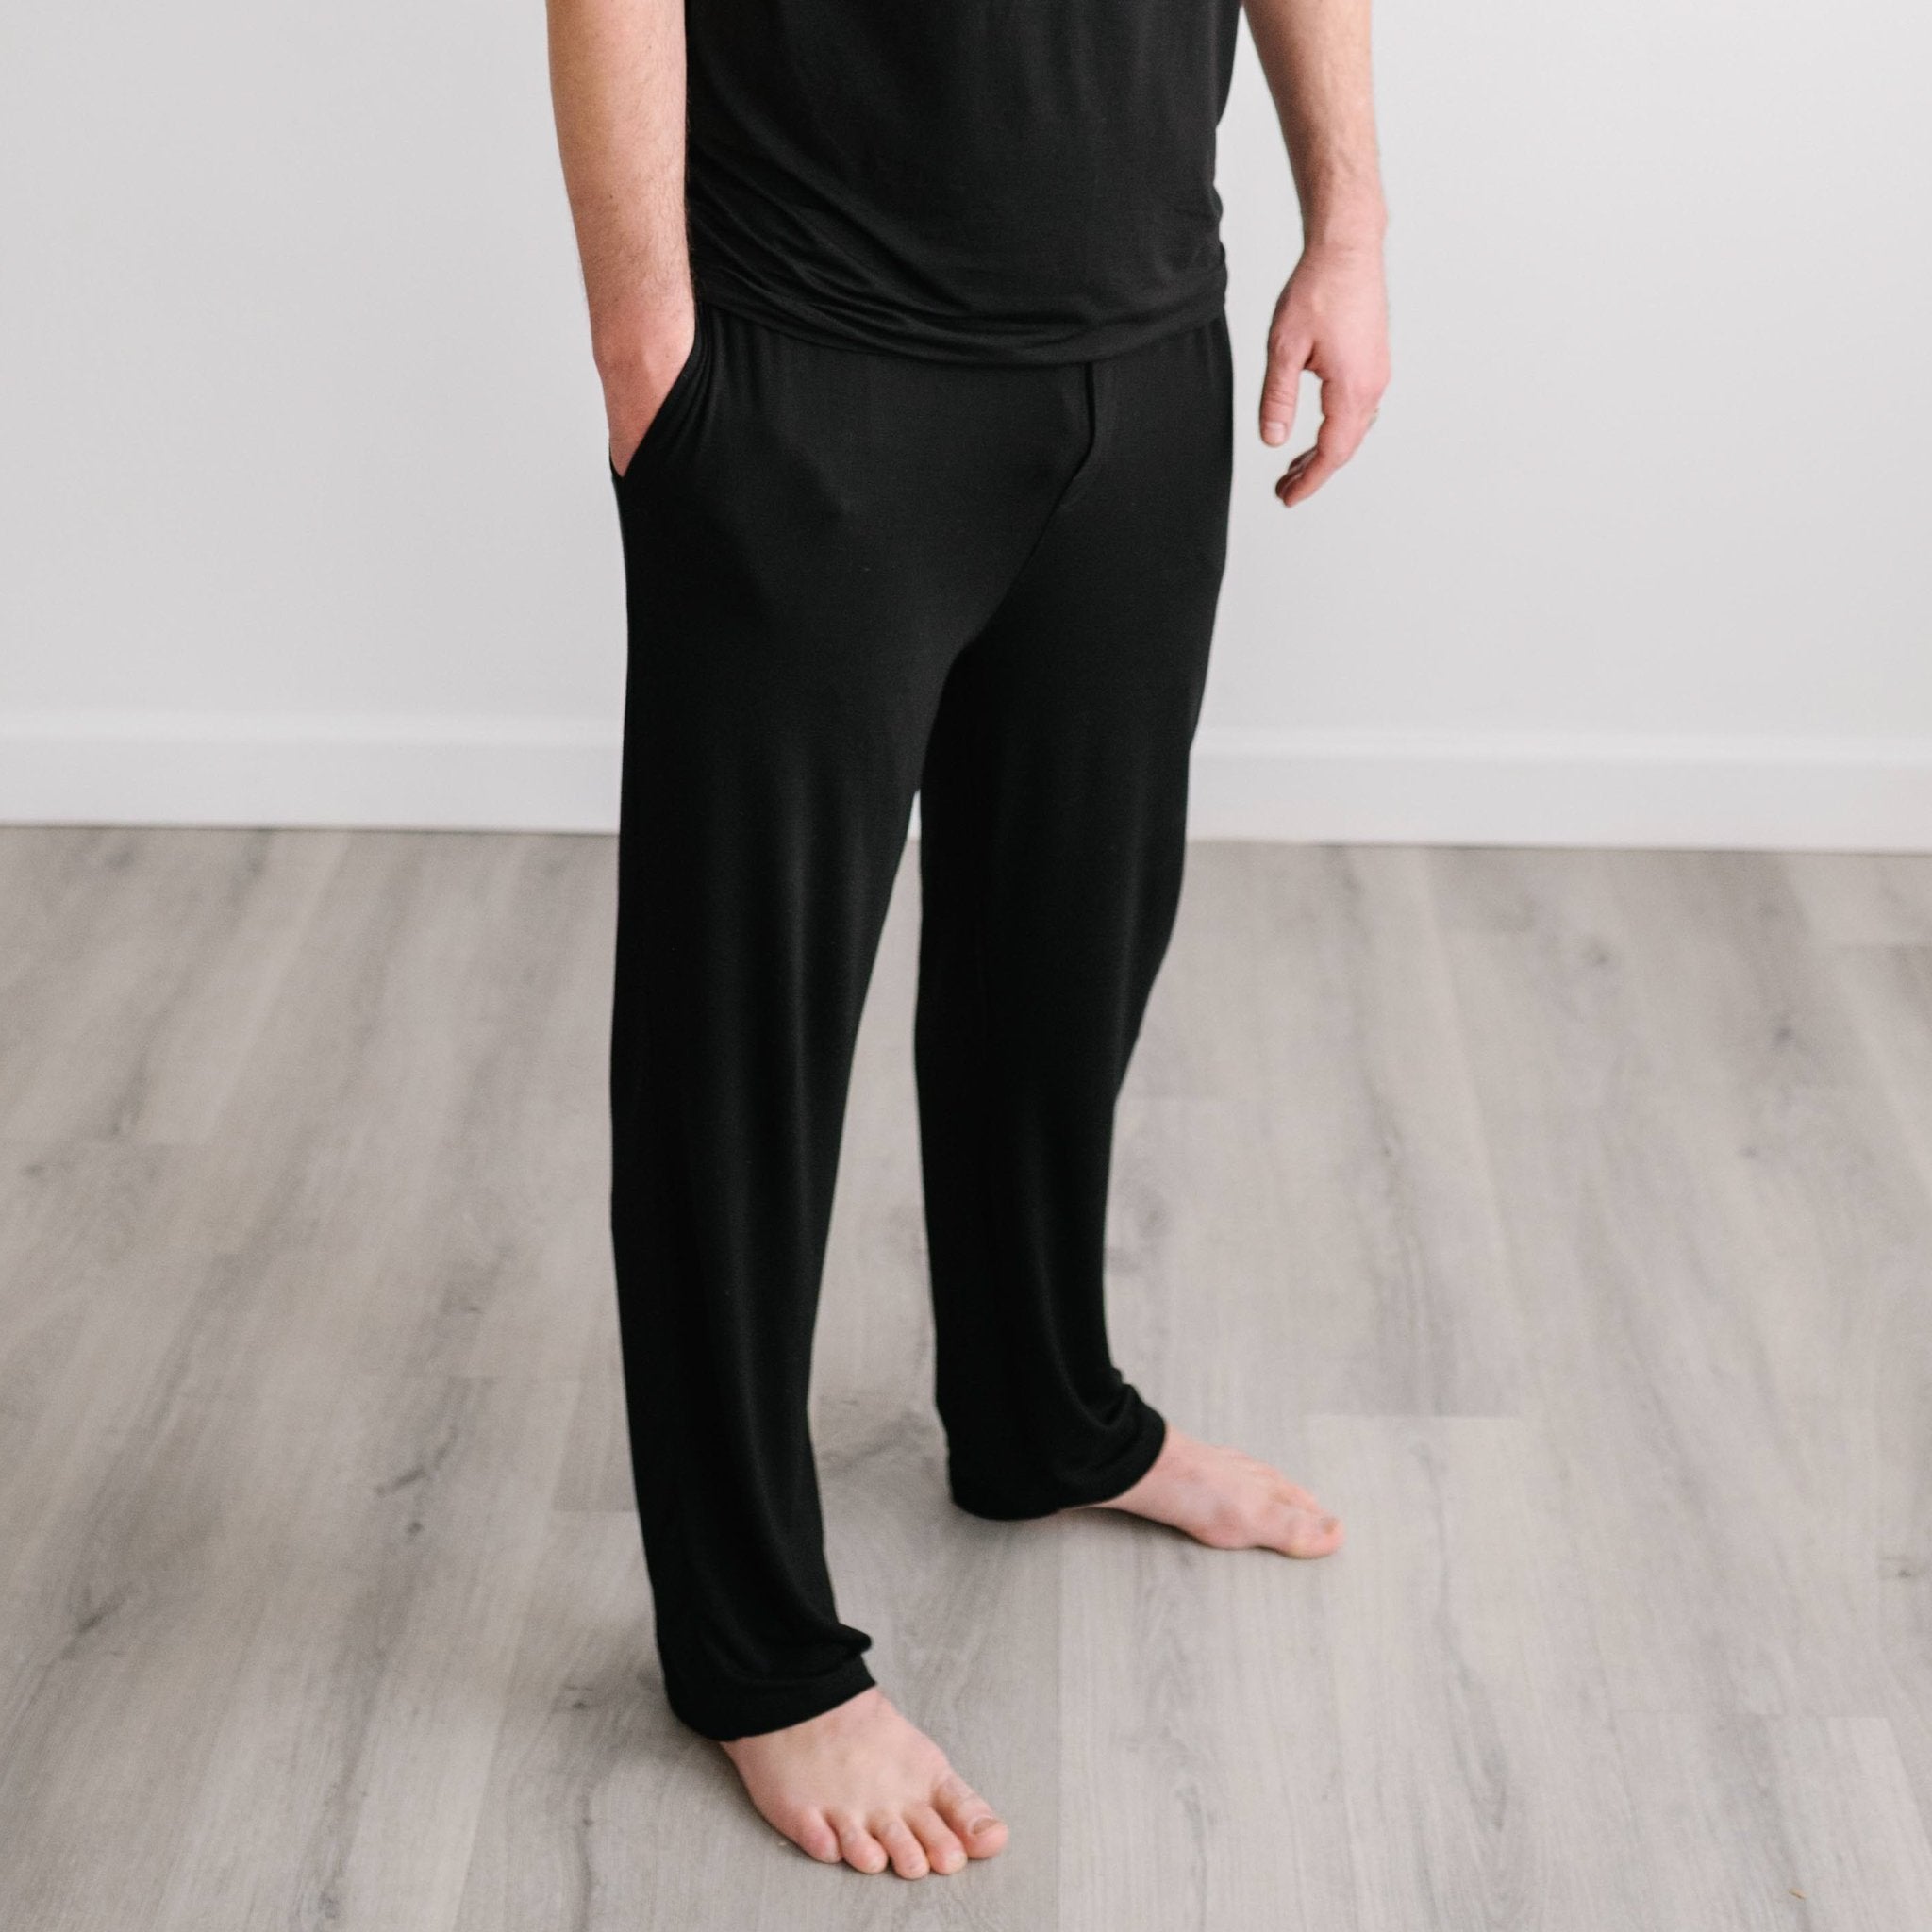 Plaid Pajama Pants for Tall Men  American Tall